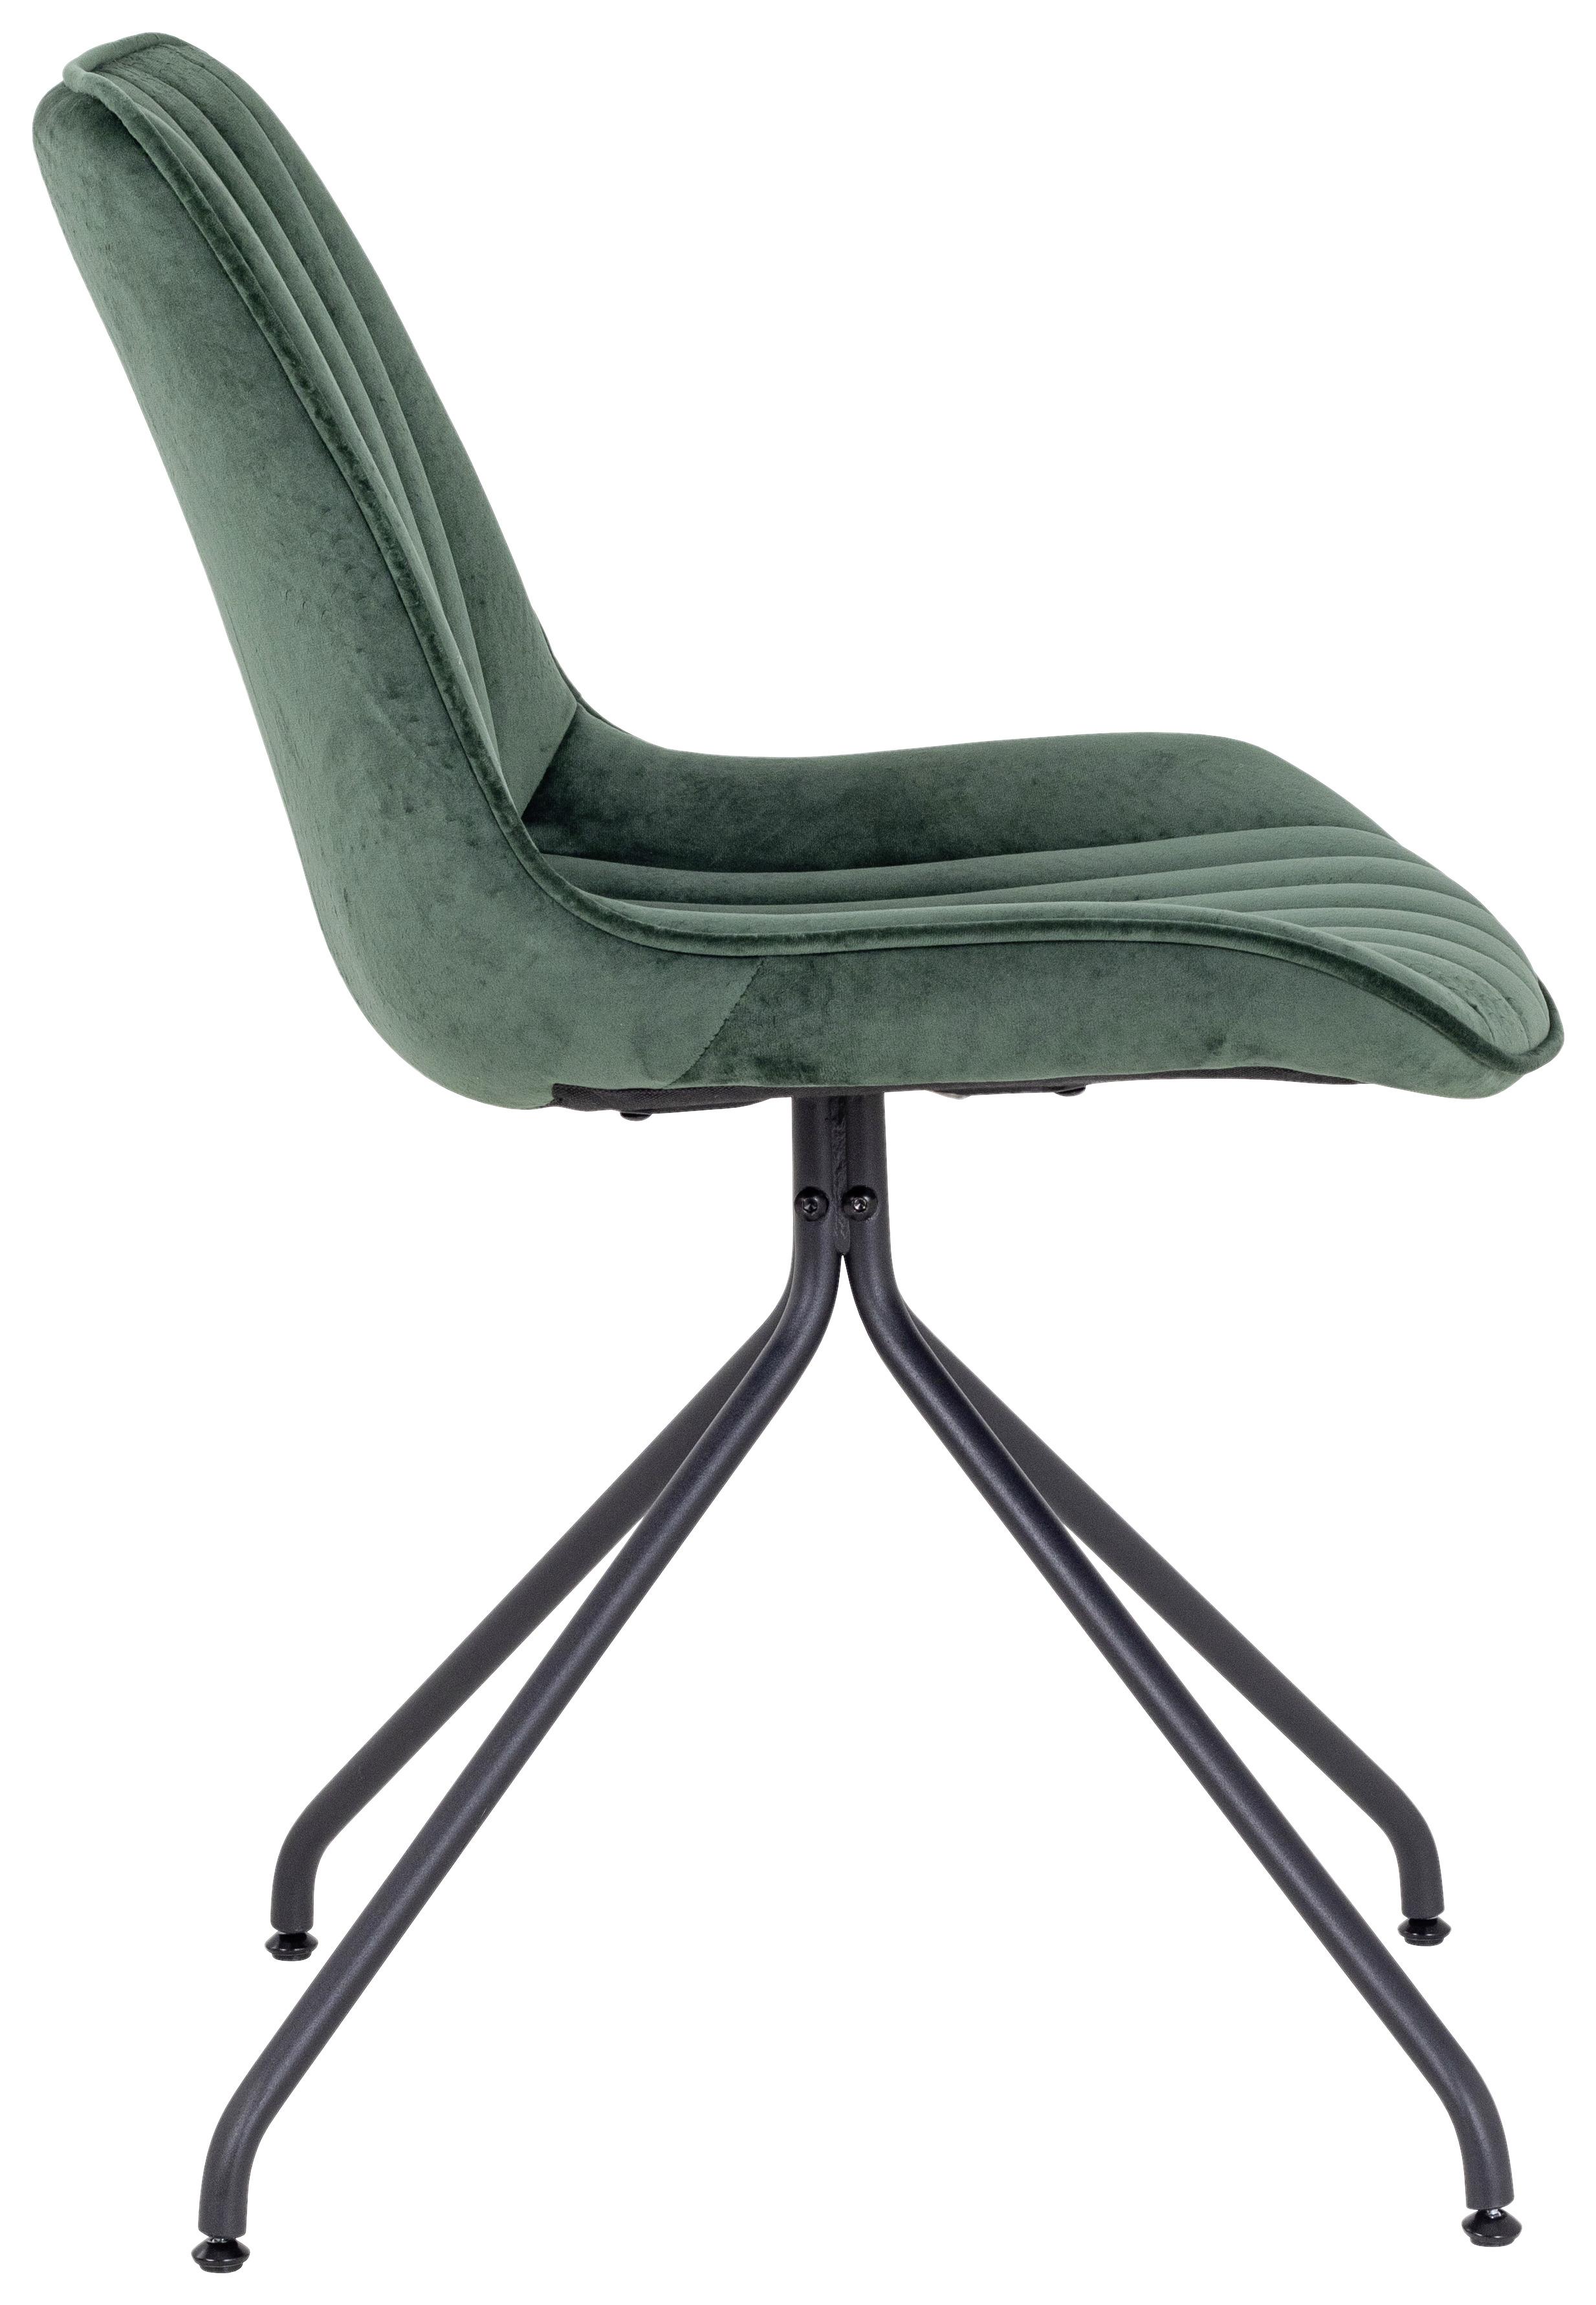 Stuhl aus Samt in Grün - Schwarz/Grün, MODERN, Textil/Metall (50/83,5/51cm) - Modern Living